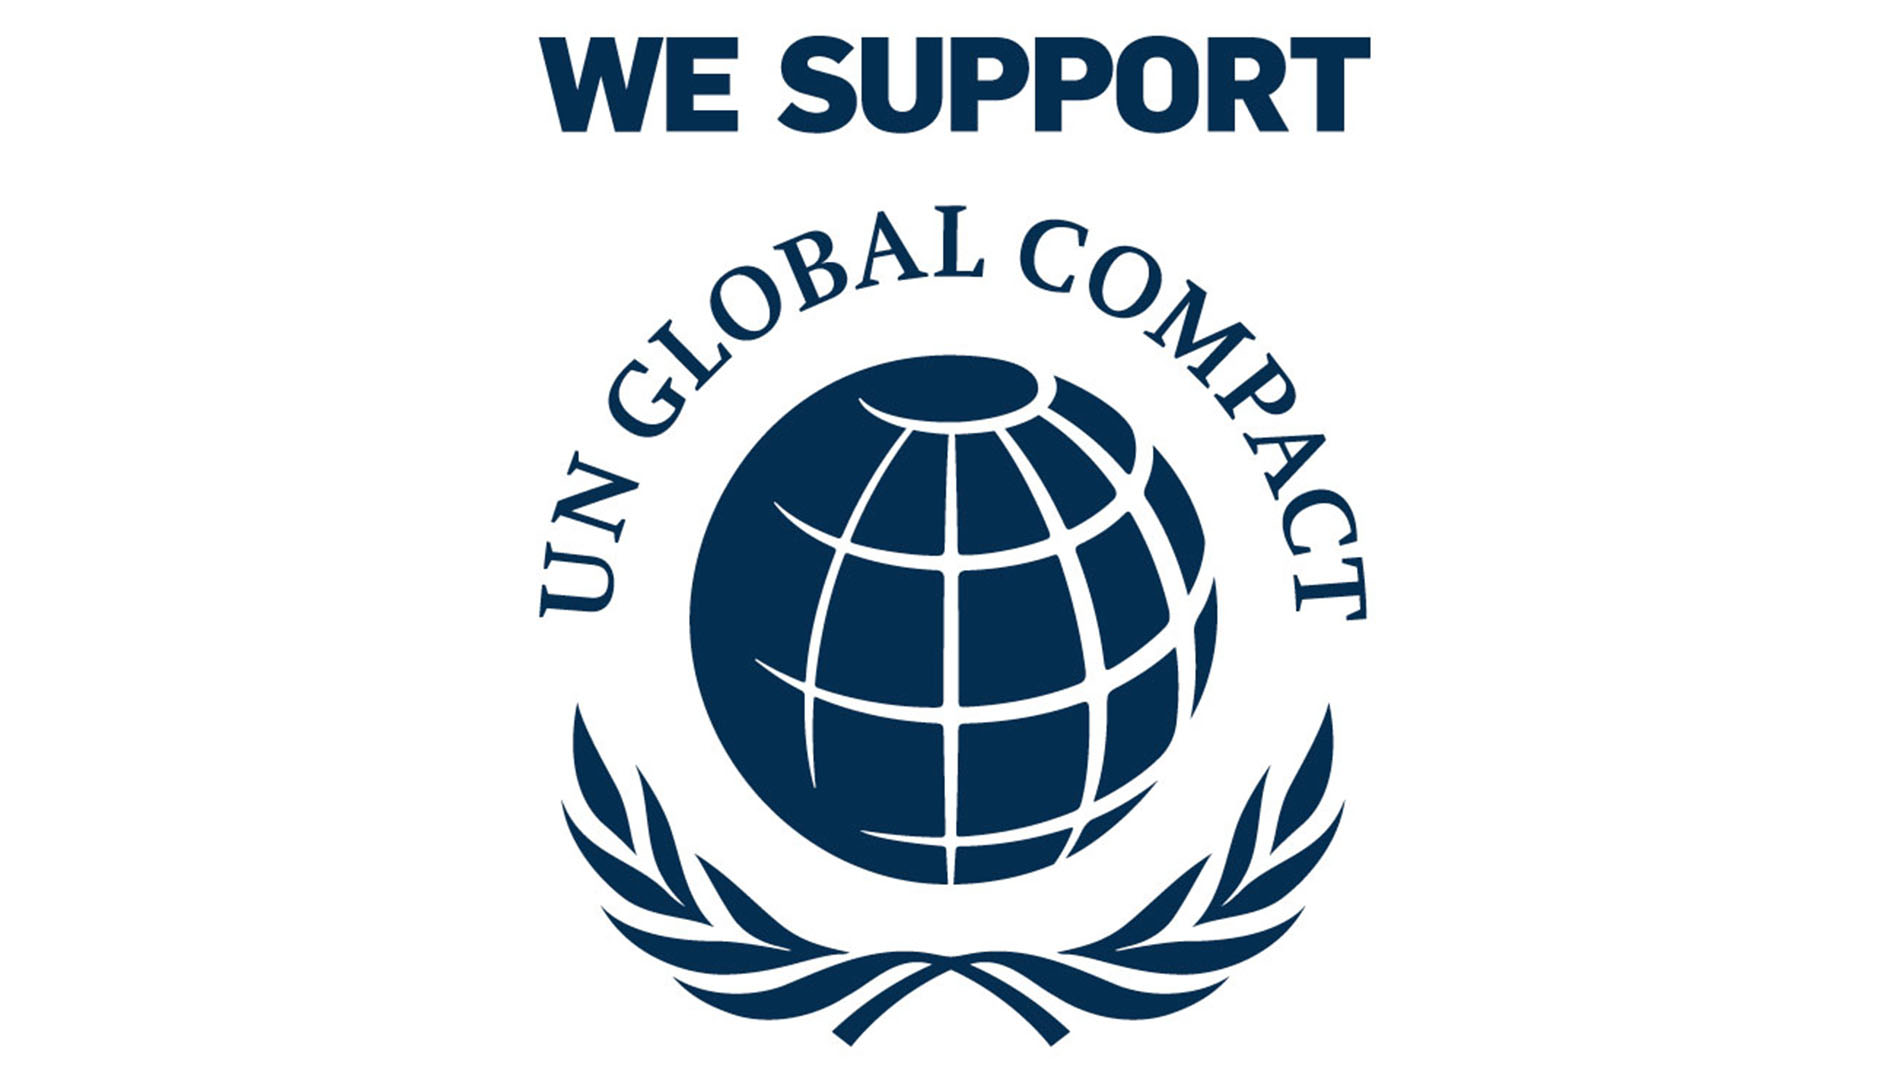 Adhesión al UN Global Compact